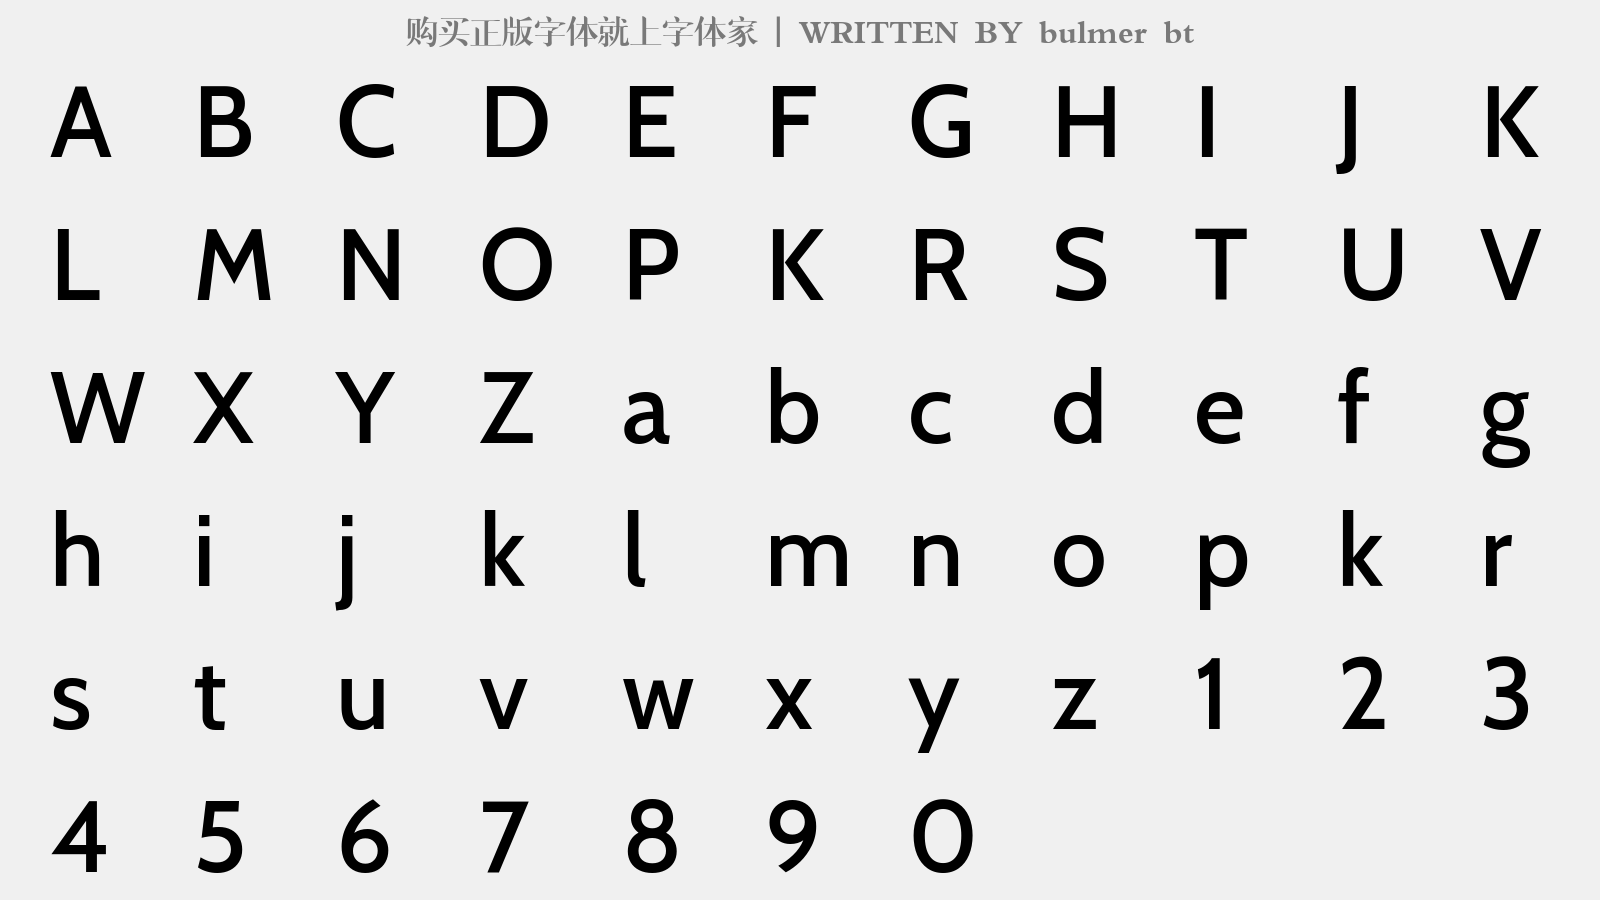 bulmer bt - 大写字母/小写字母/数字